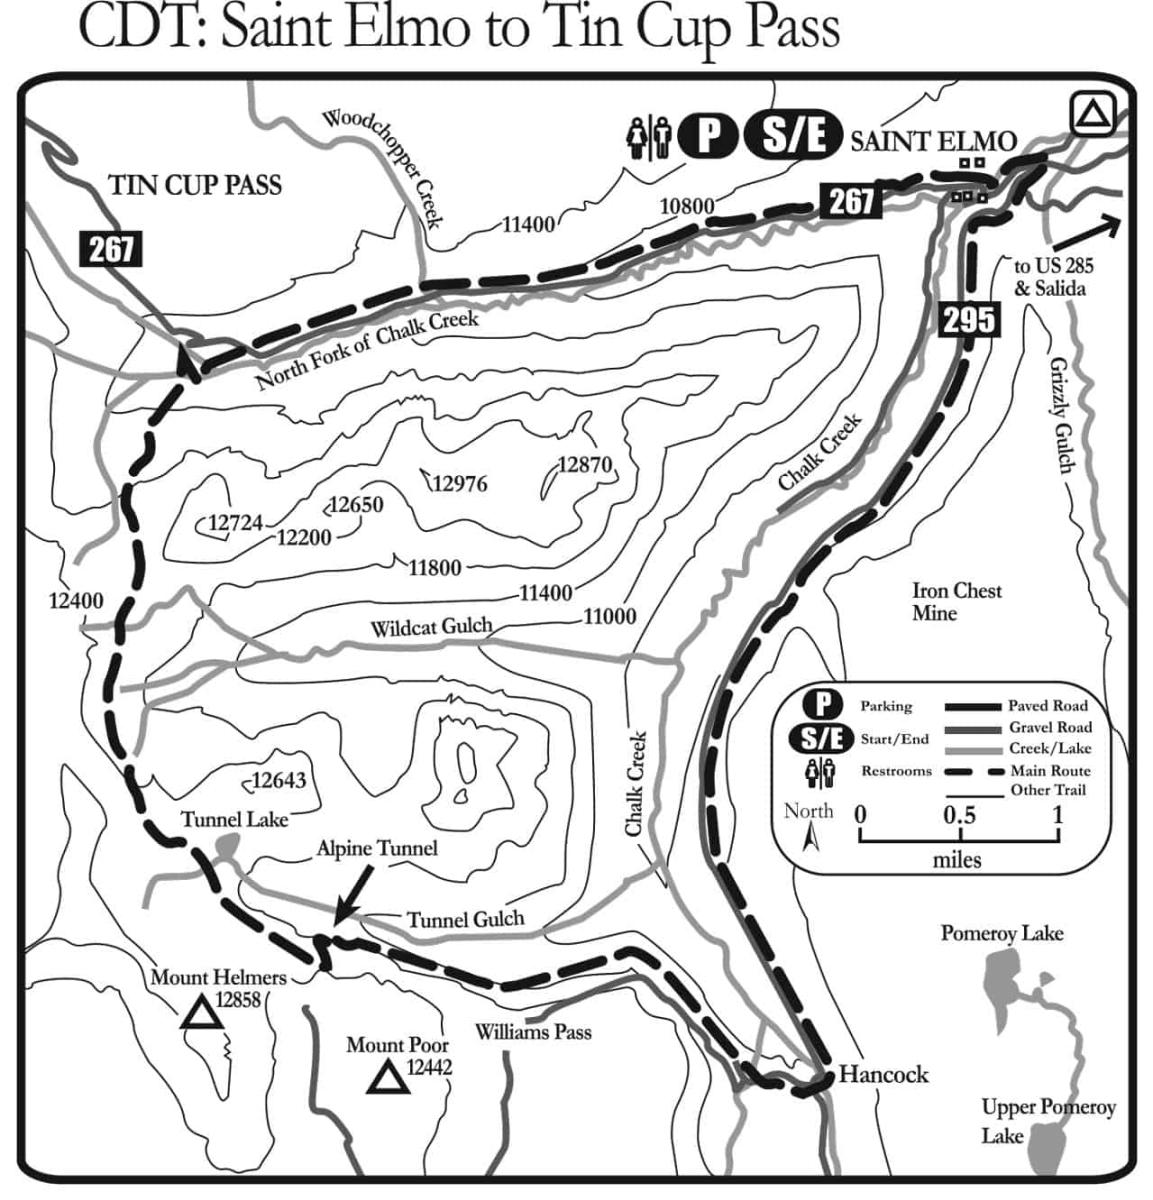 CDT-Saint-Elmo-to-Tin-Cup-Pass-map